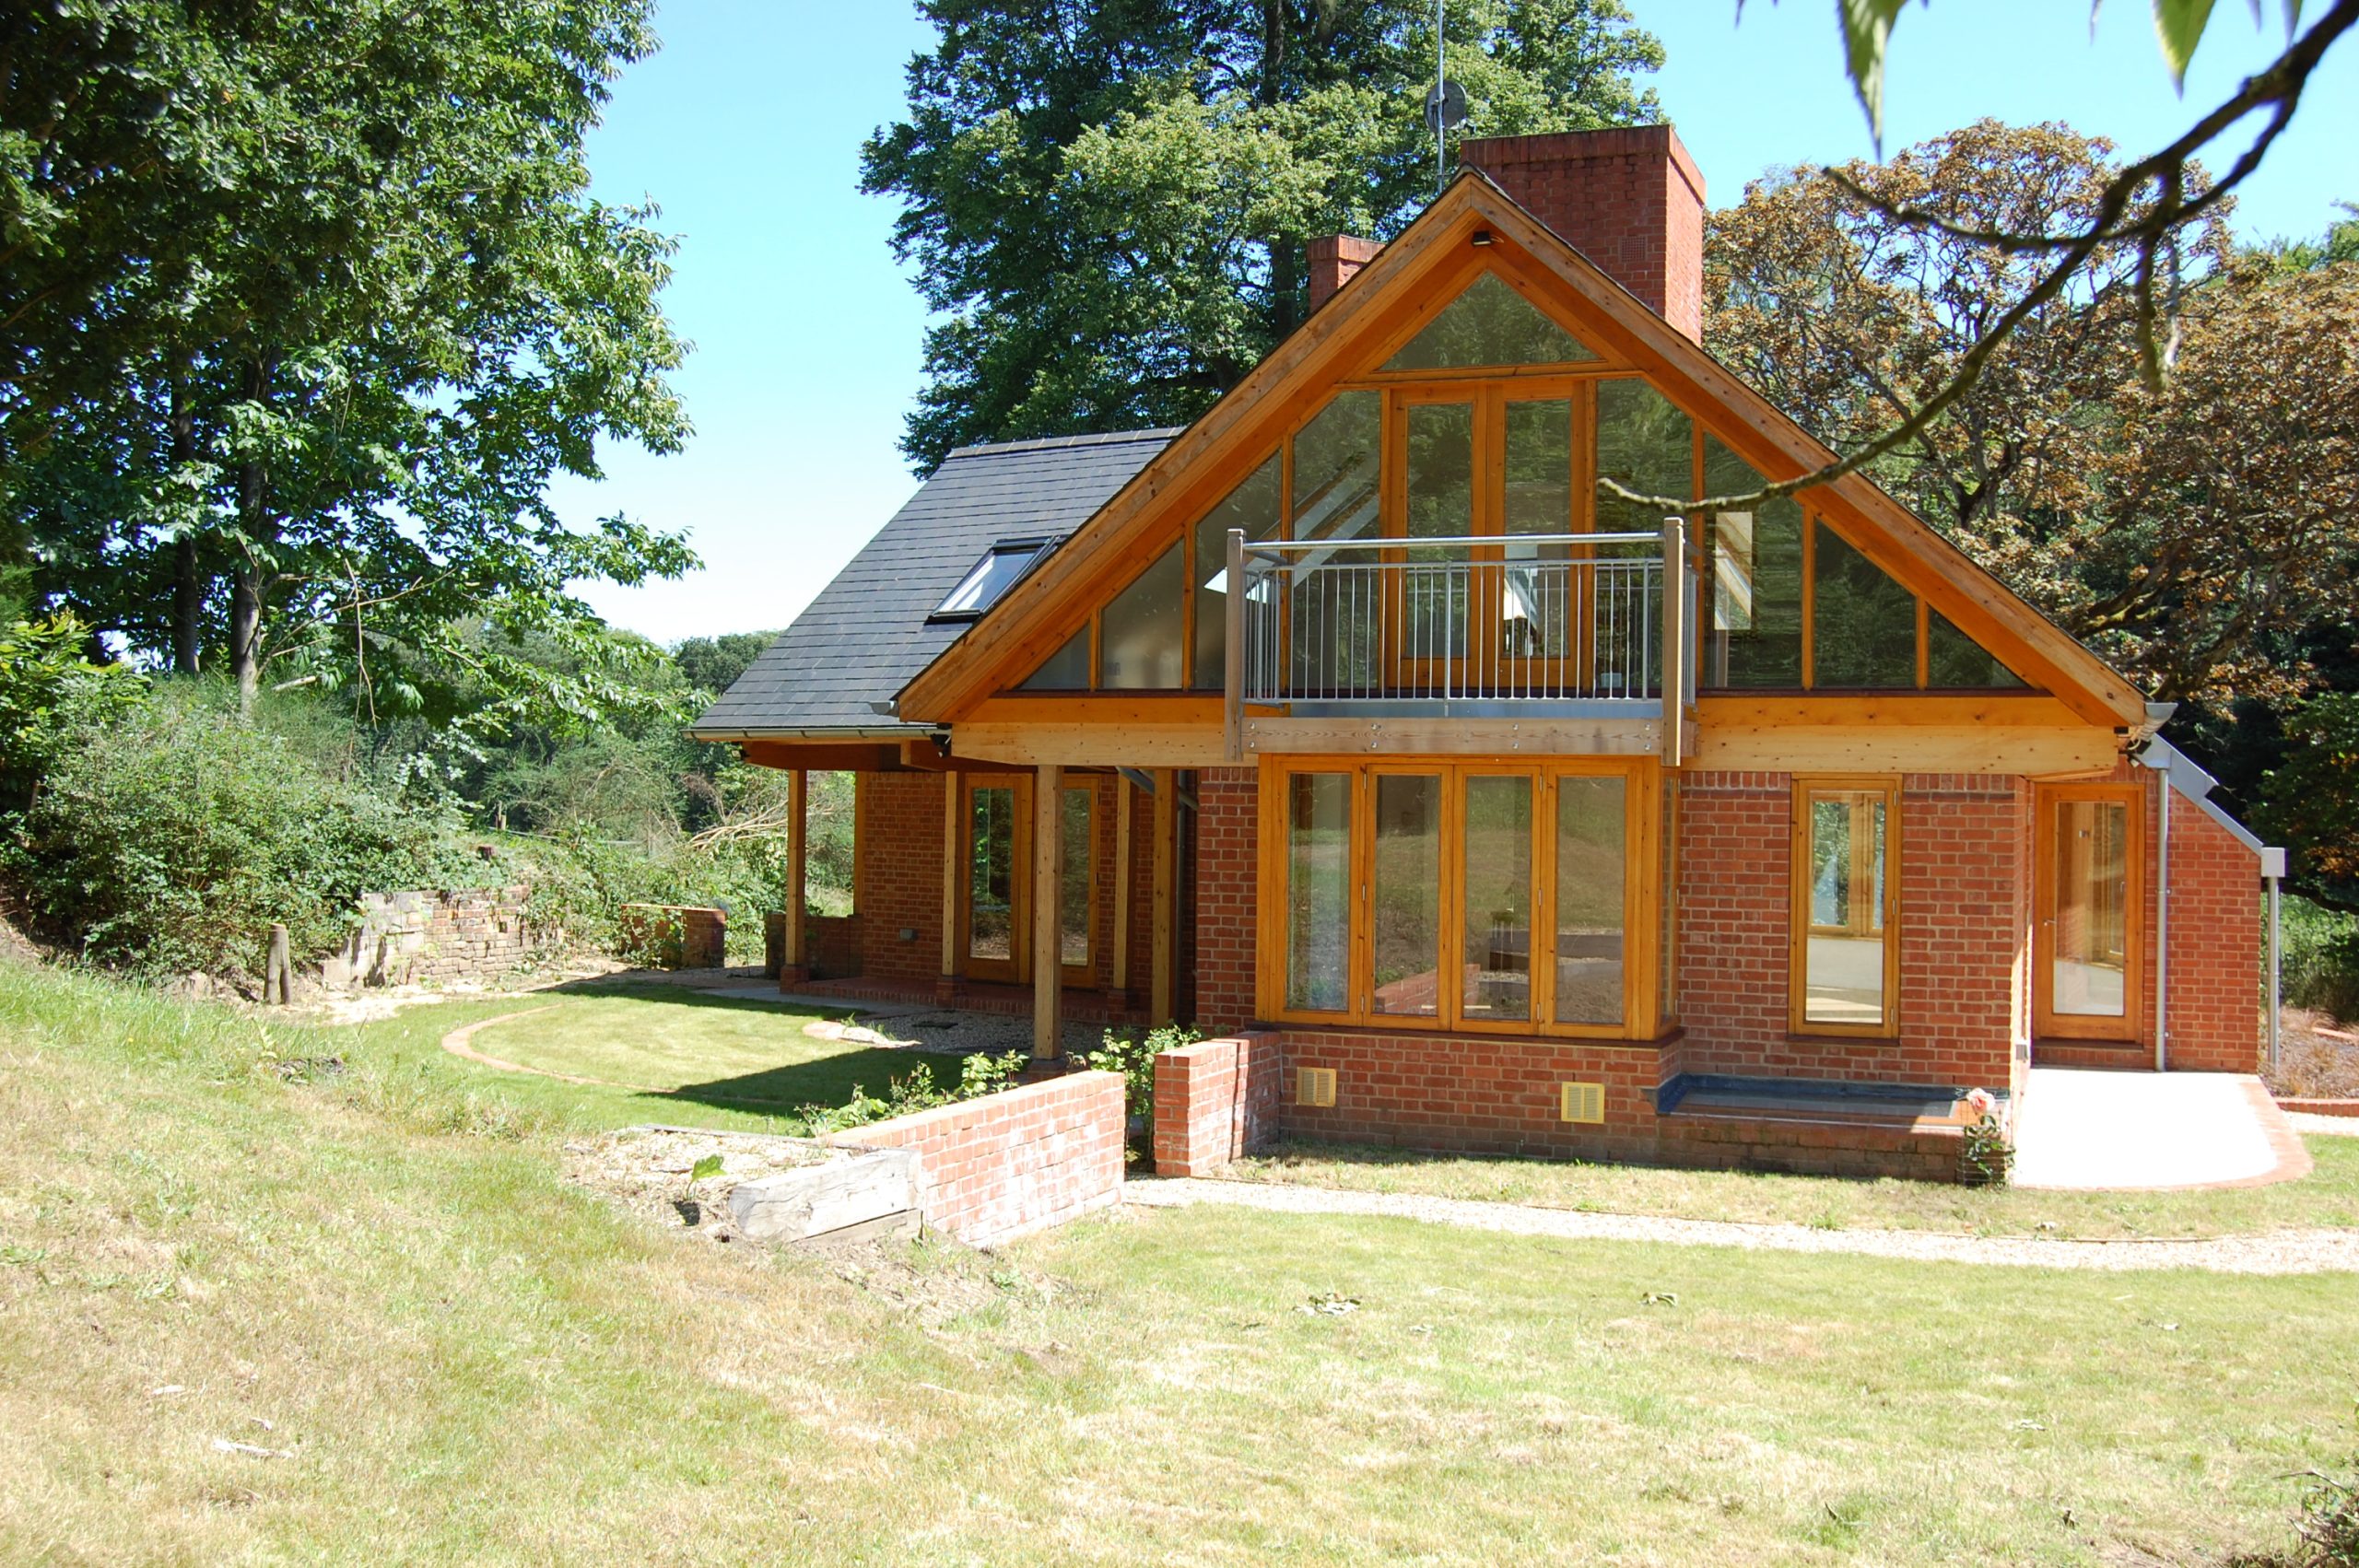 Family Home in South Farnham – £925,000